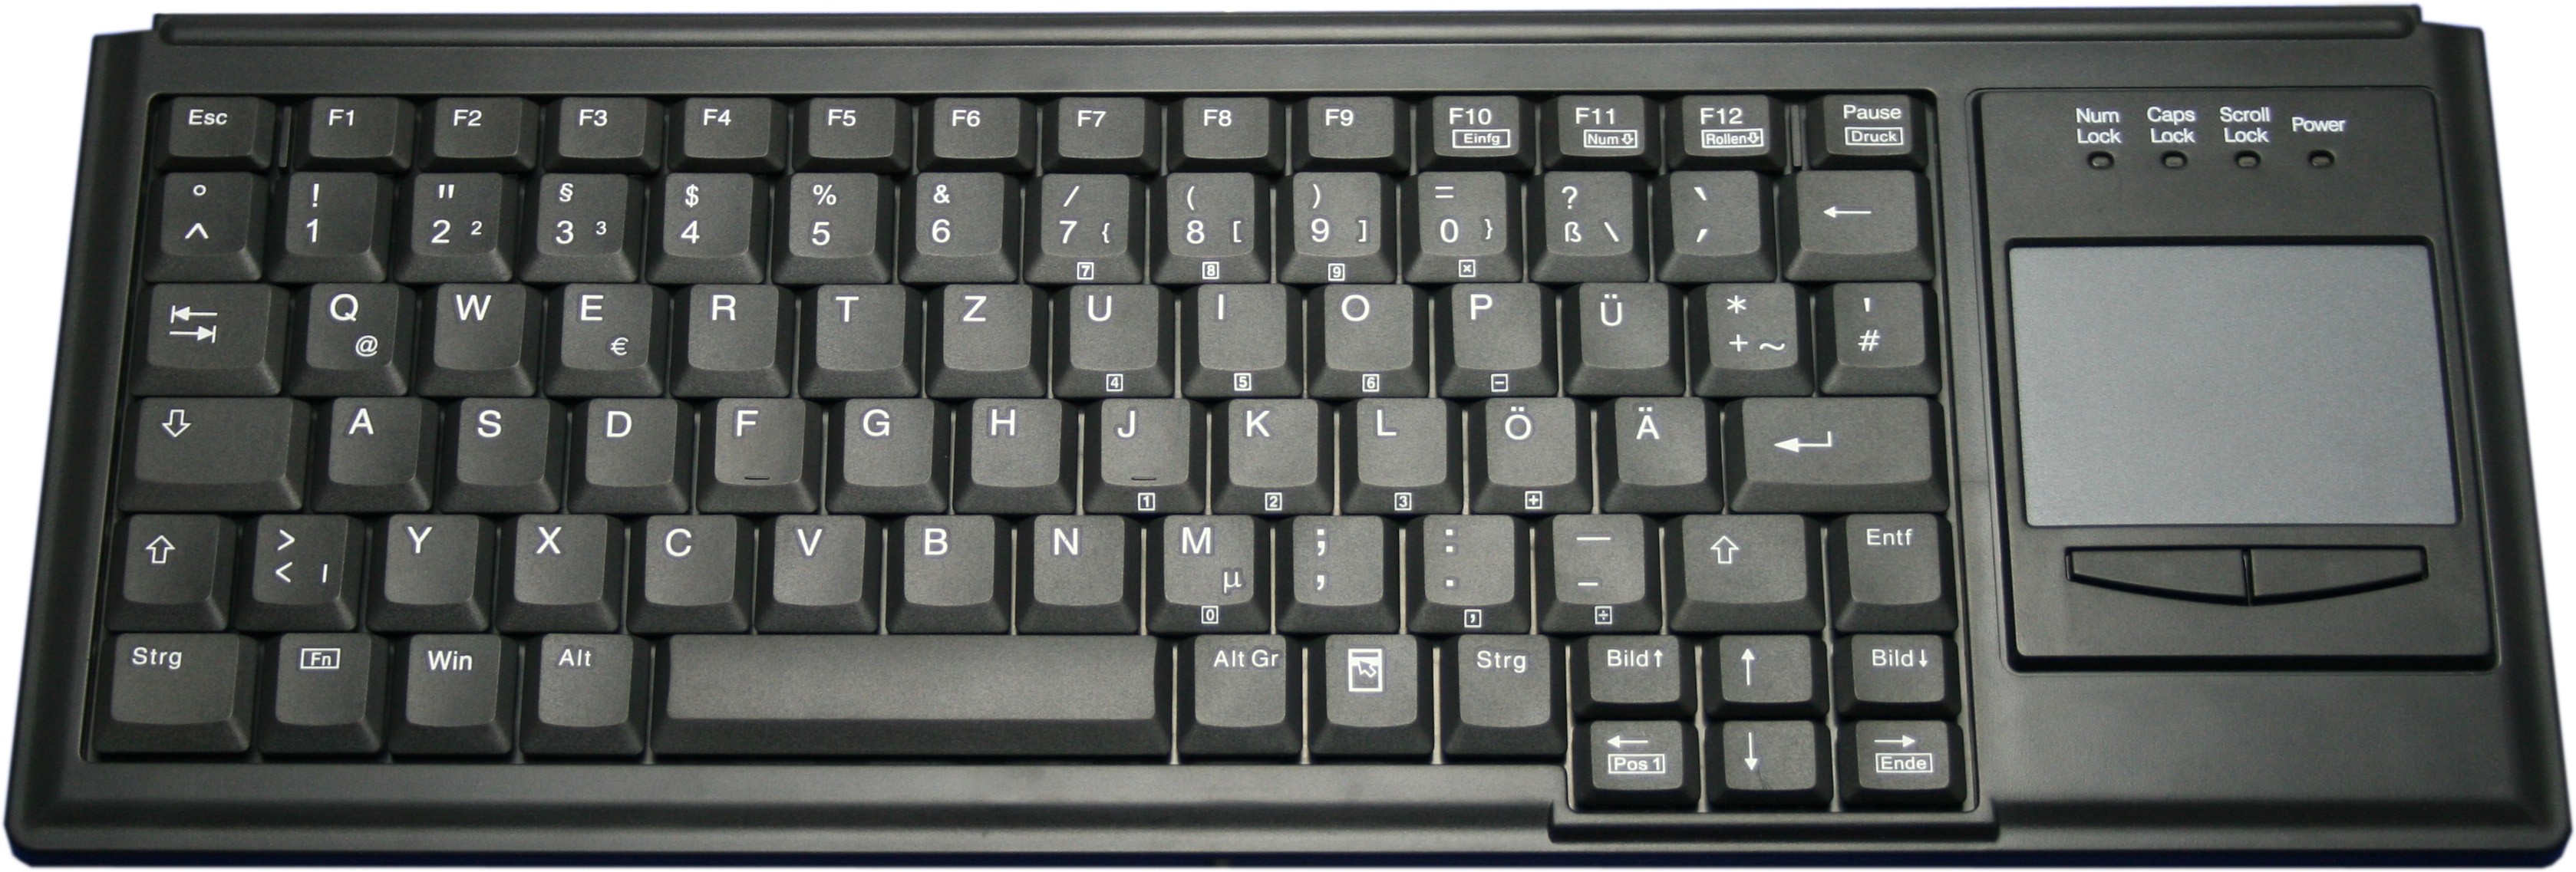 83 Key Notebook Style Touchpad Keyboard, USB, black, German layout